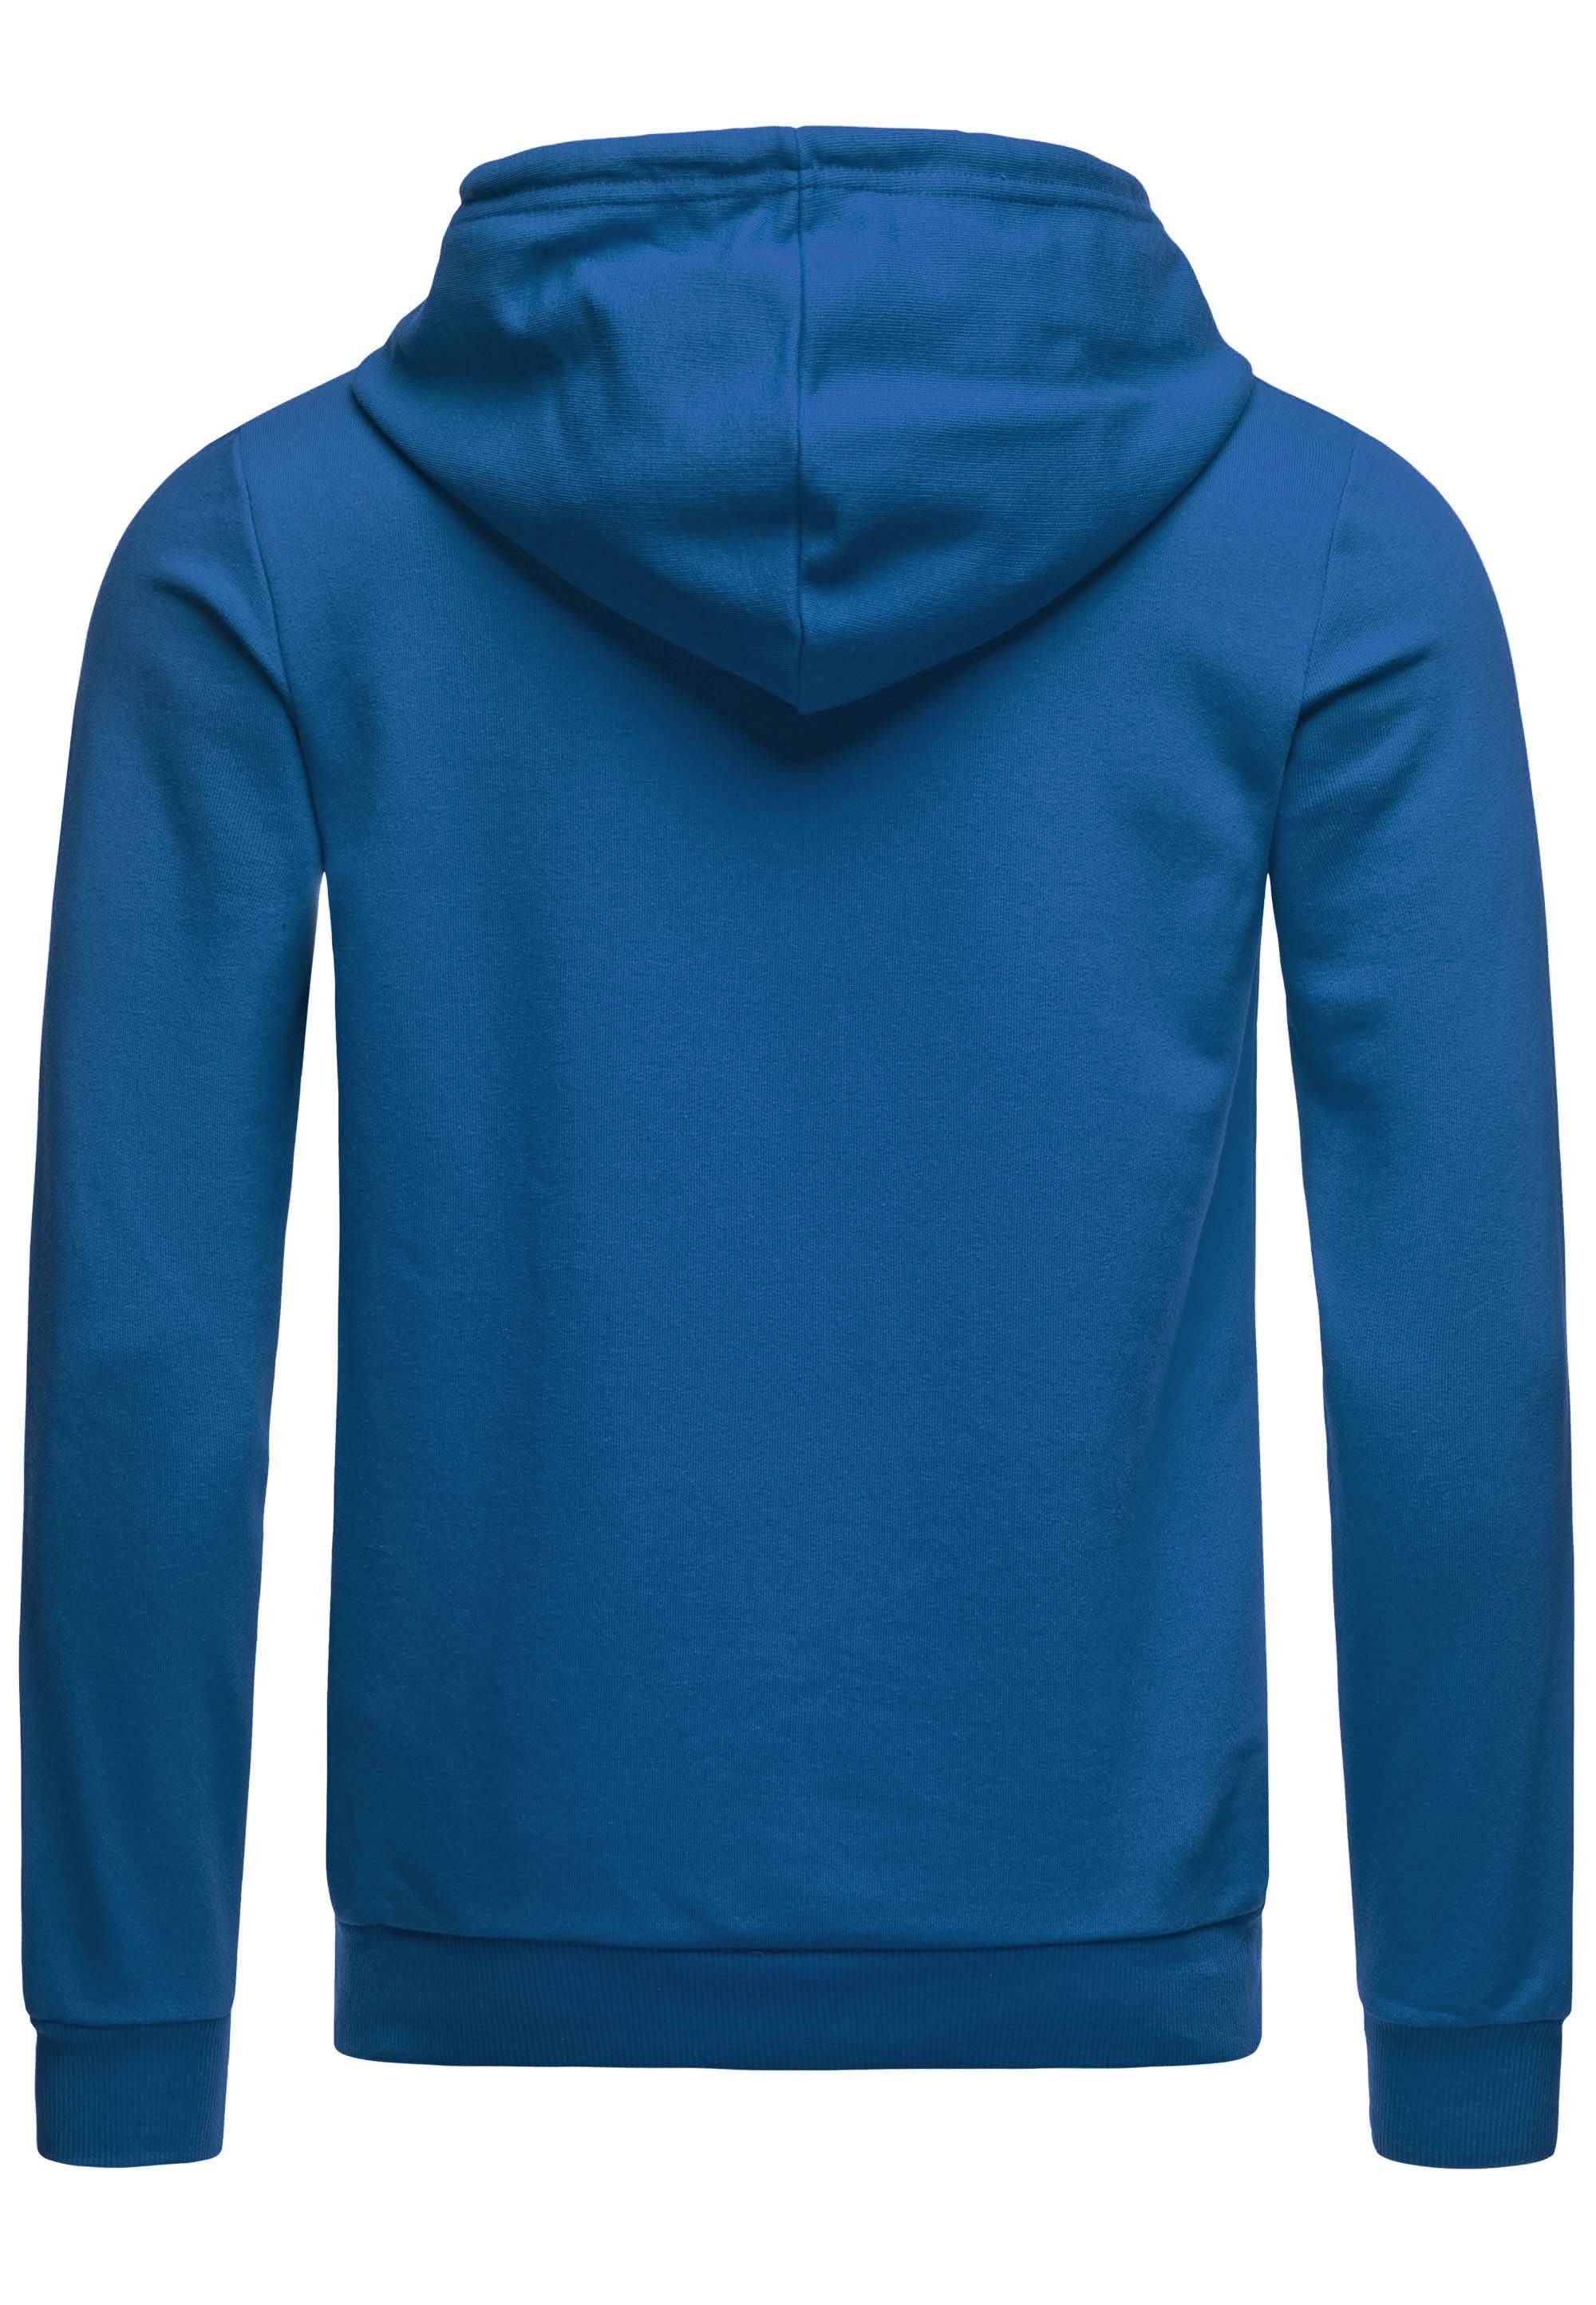 RedBridge Kapuzensweatshirt Hoodie mit Dunkelblau Qualität Kängurutasche Premium